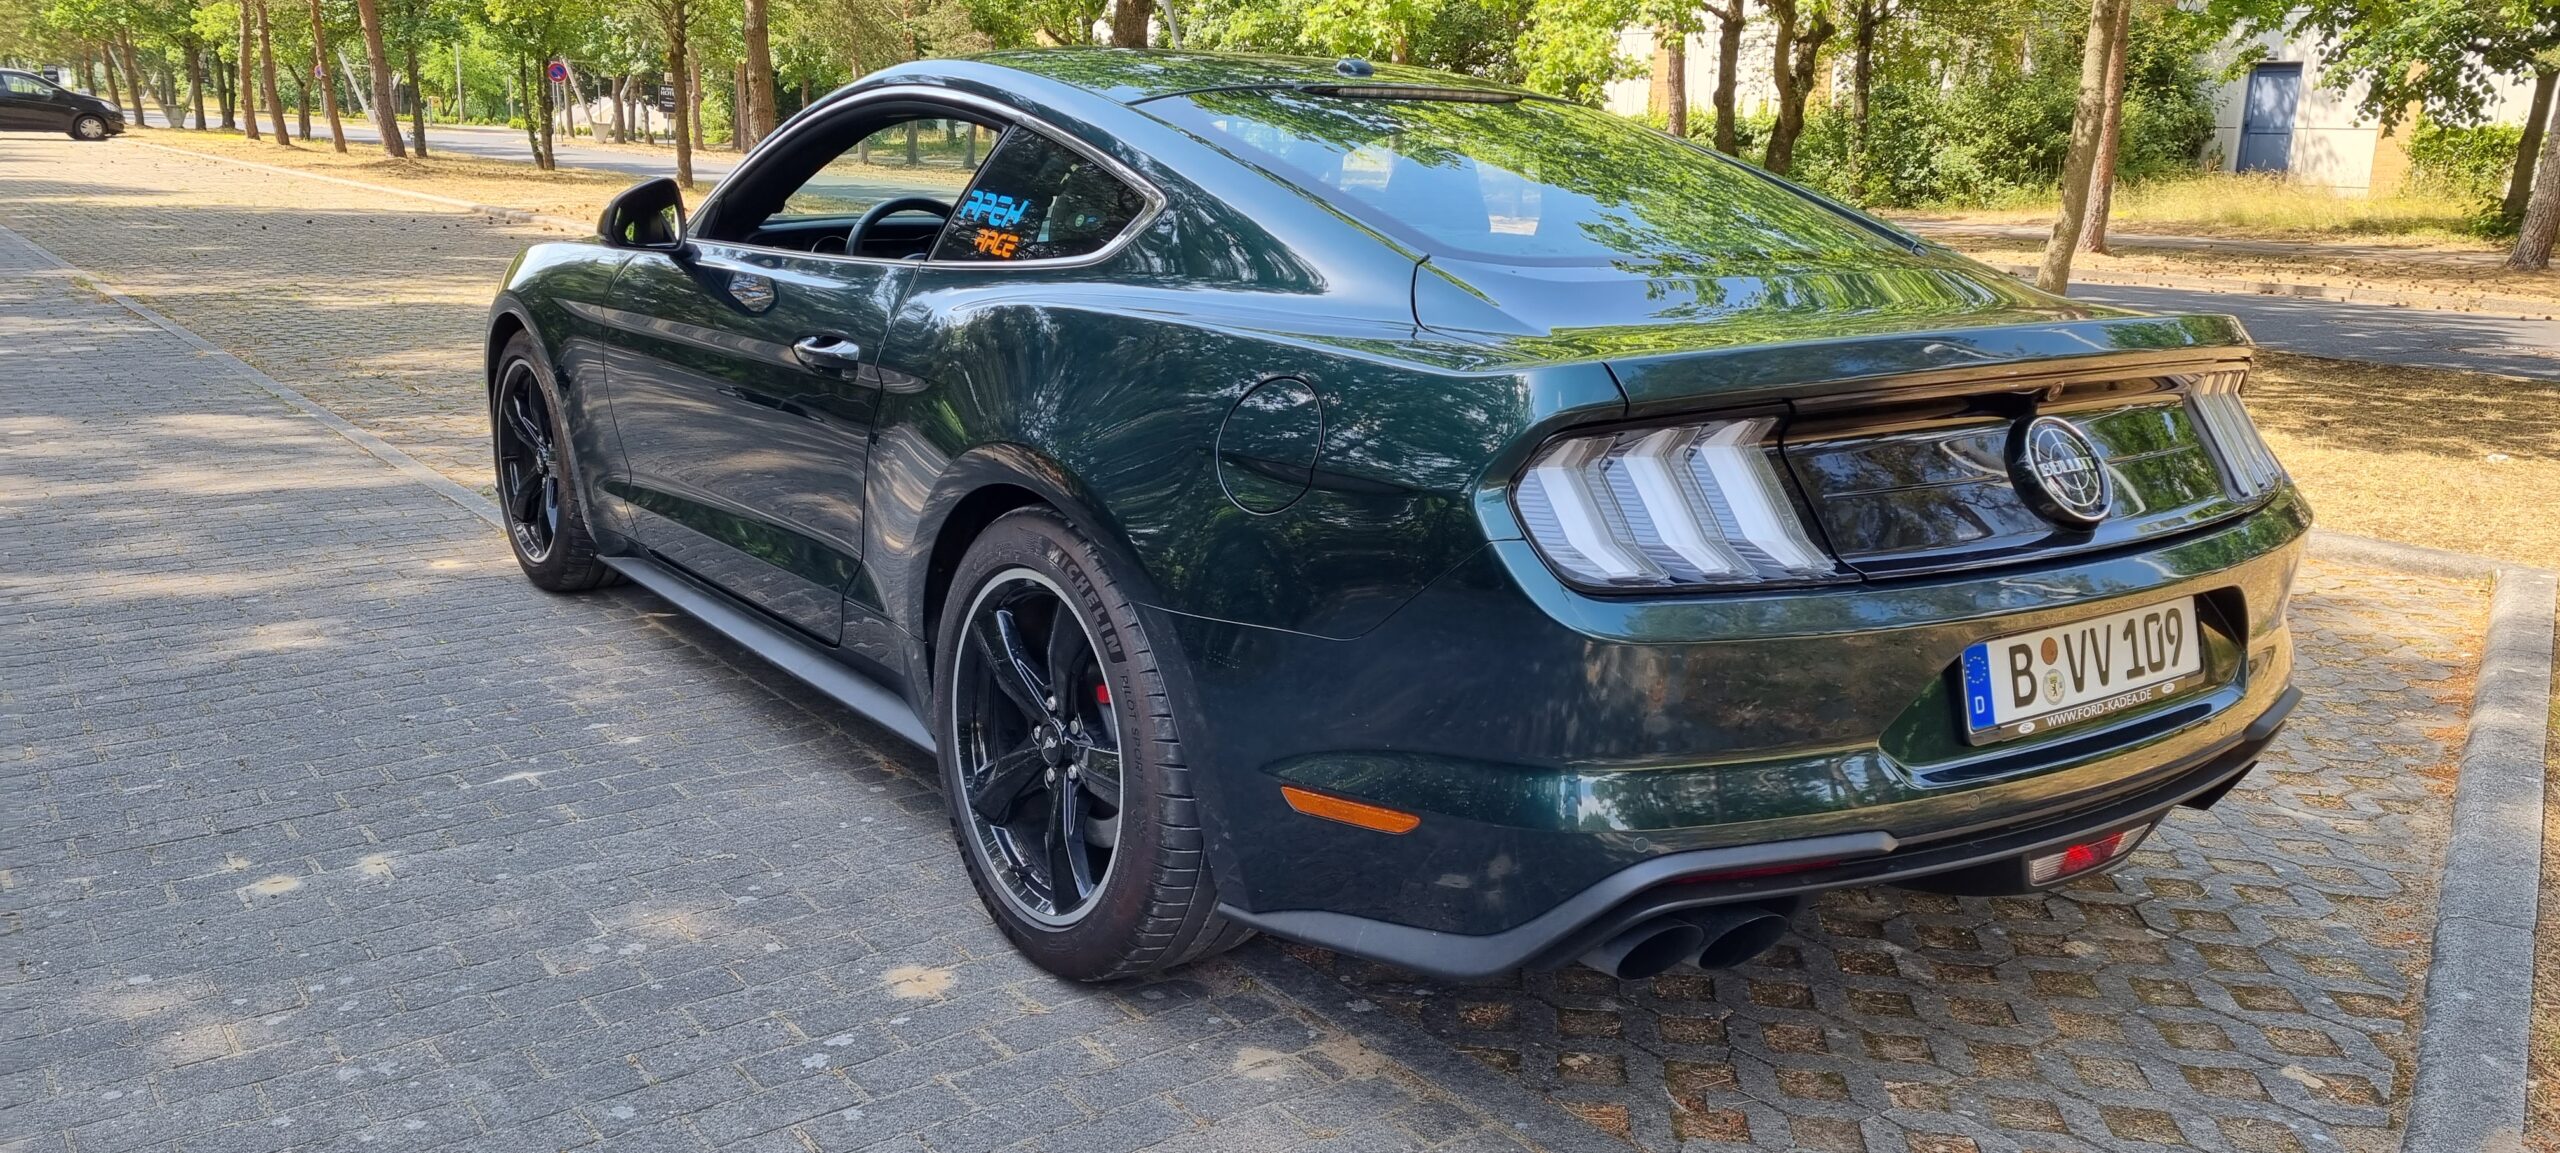 Green 2019 Ford Mustang Bullitt